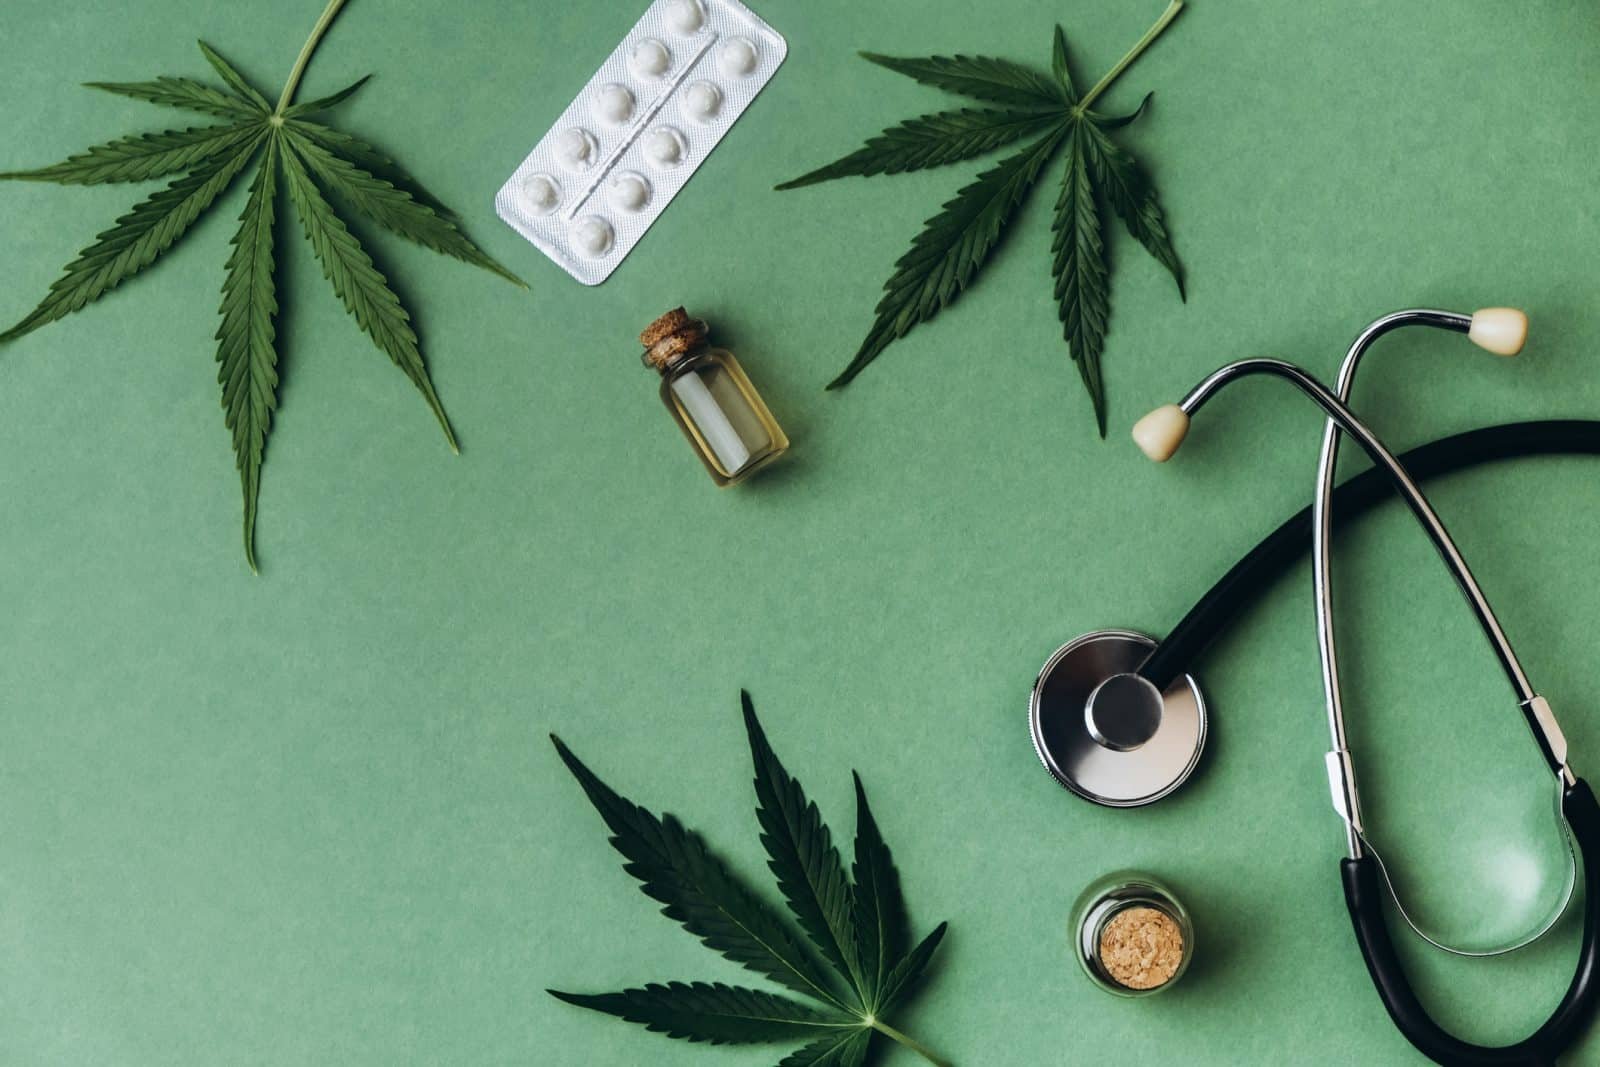 marijuana on a table with stethoscope